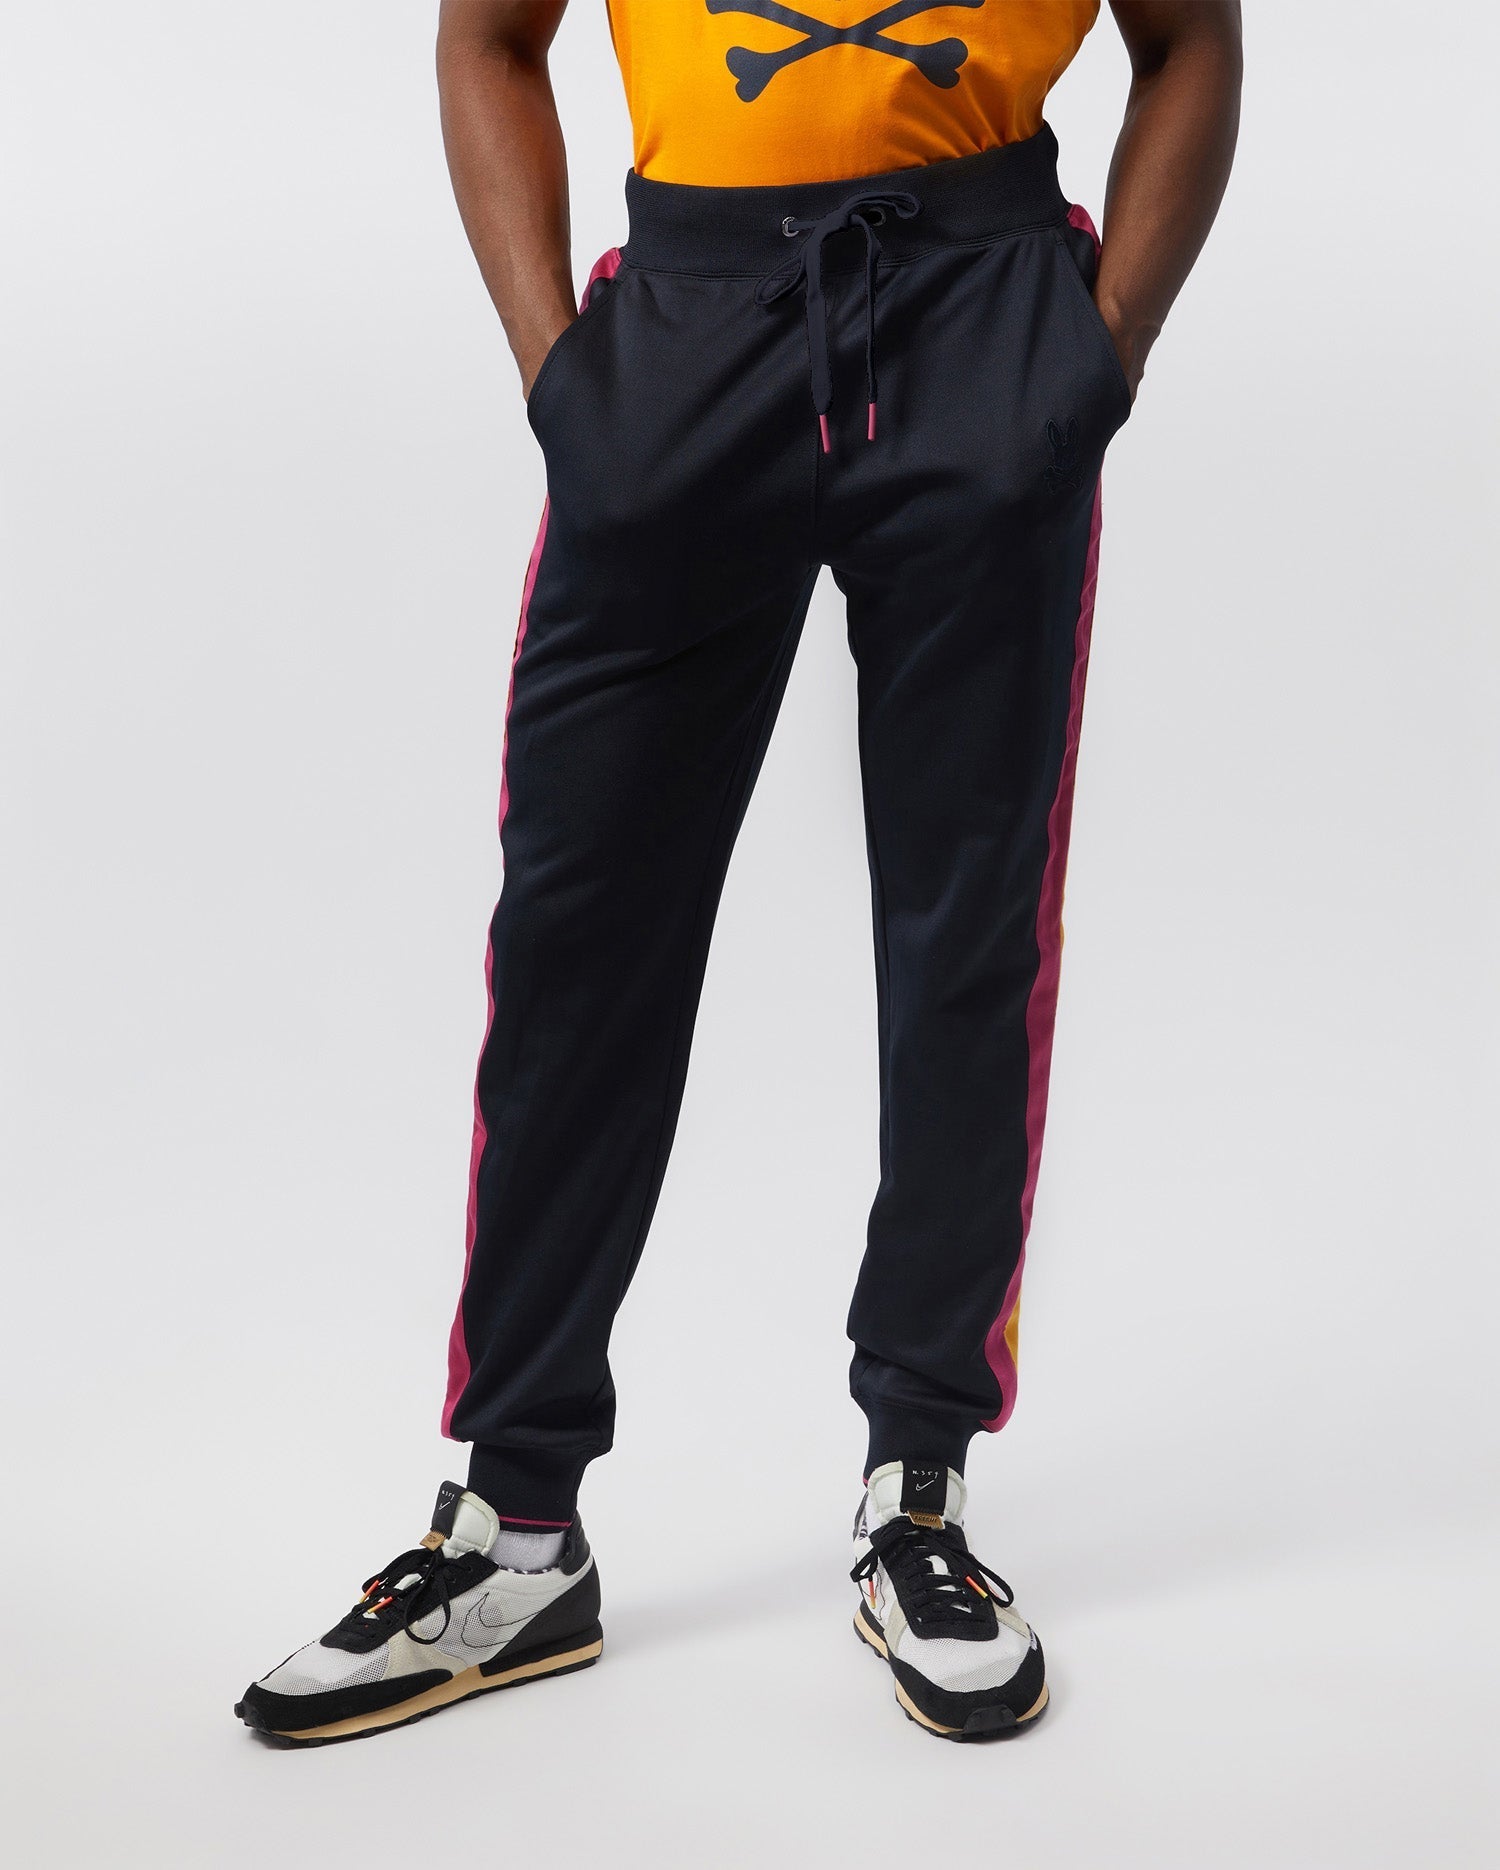 Adidas Originals Men's Blue Version TREFOIL BADGE SILVER Track Pants  RARE New | eBay